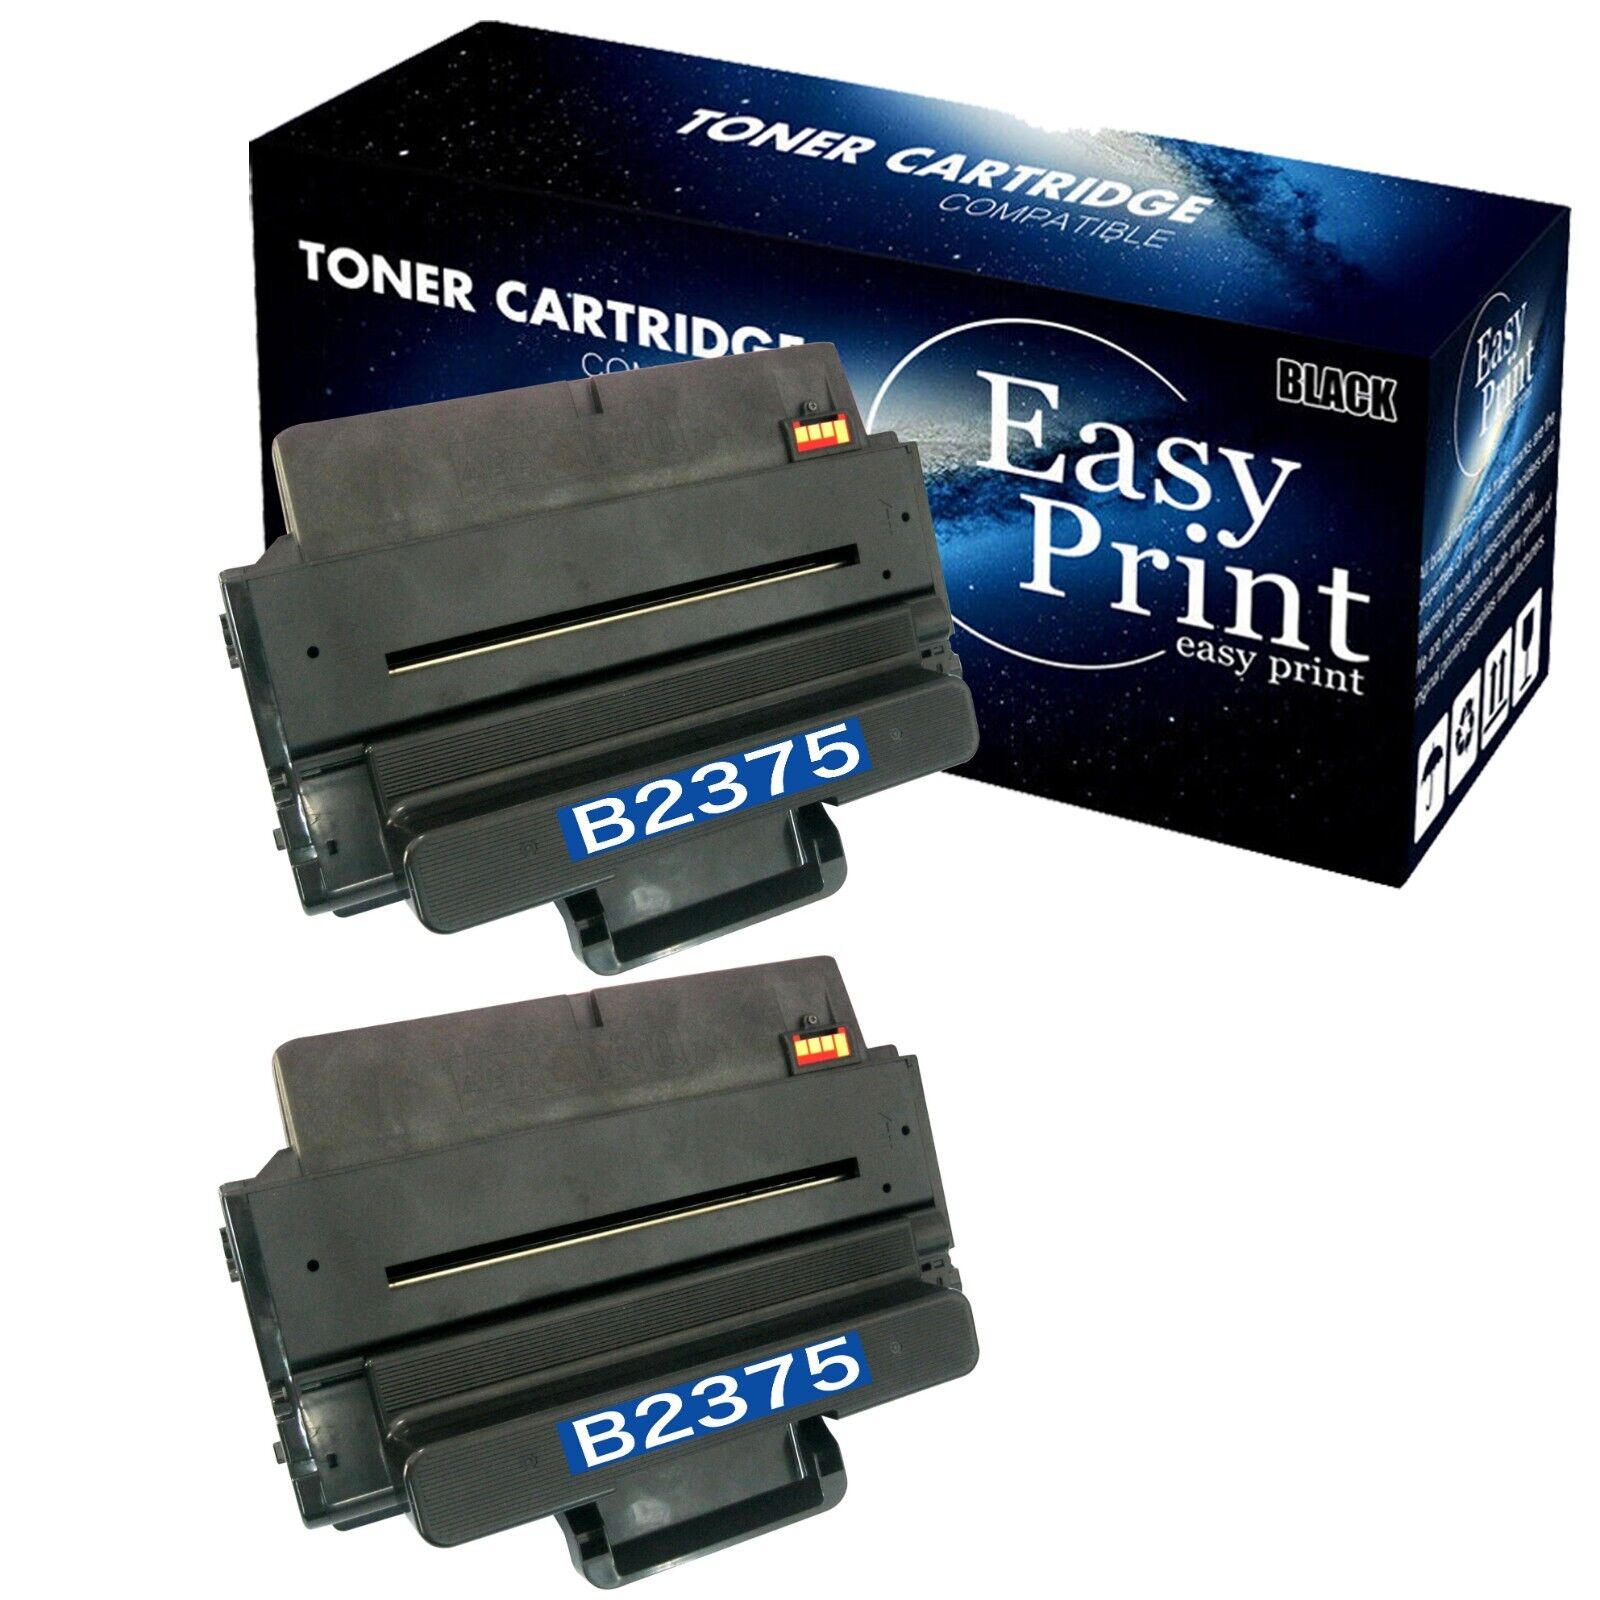 2PK 2375 Toner Cartridge for B2375dfw B2375dfw B2375 Printer